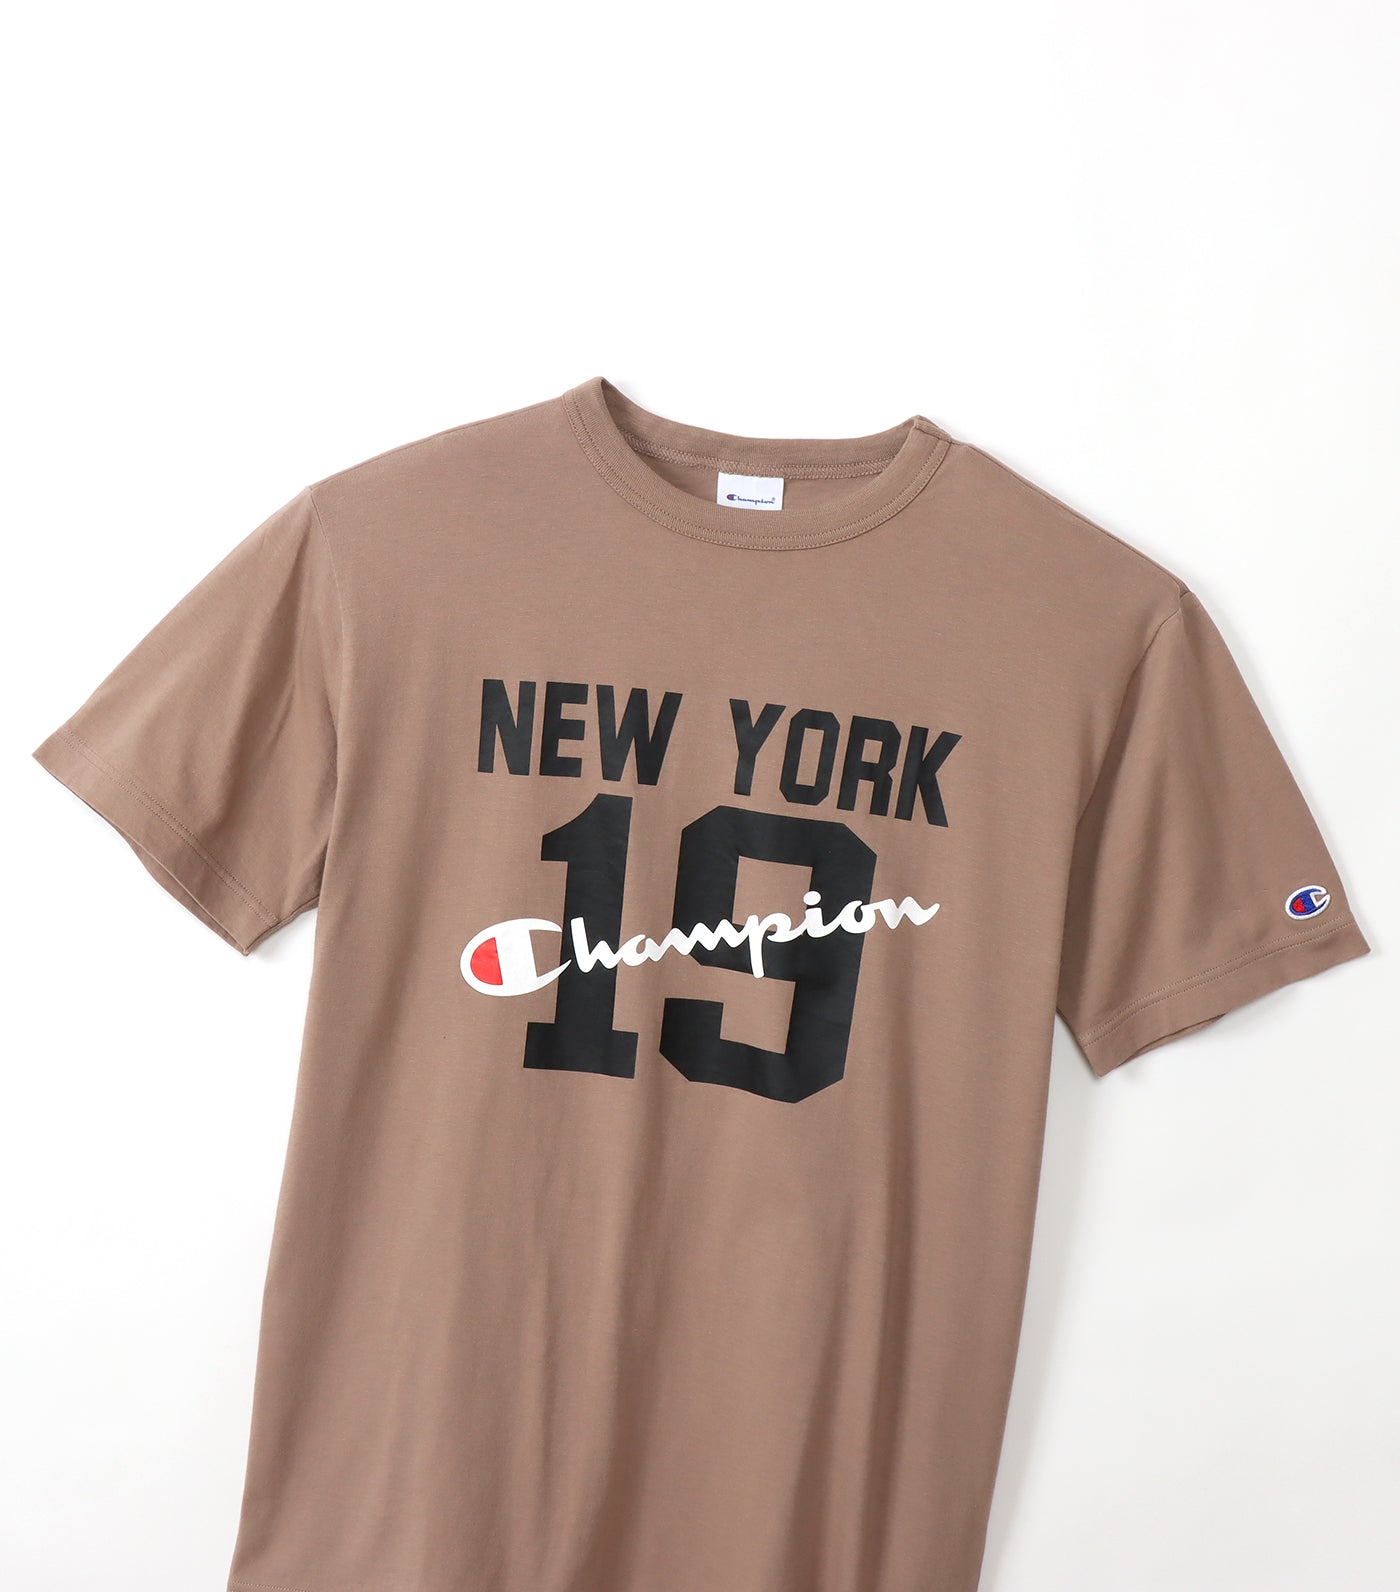 Japan Line Short Sleeve T-Shirt Medium Brown